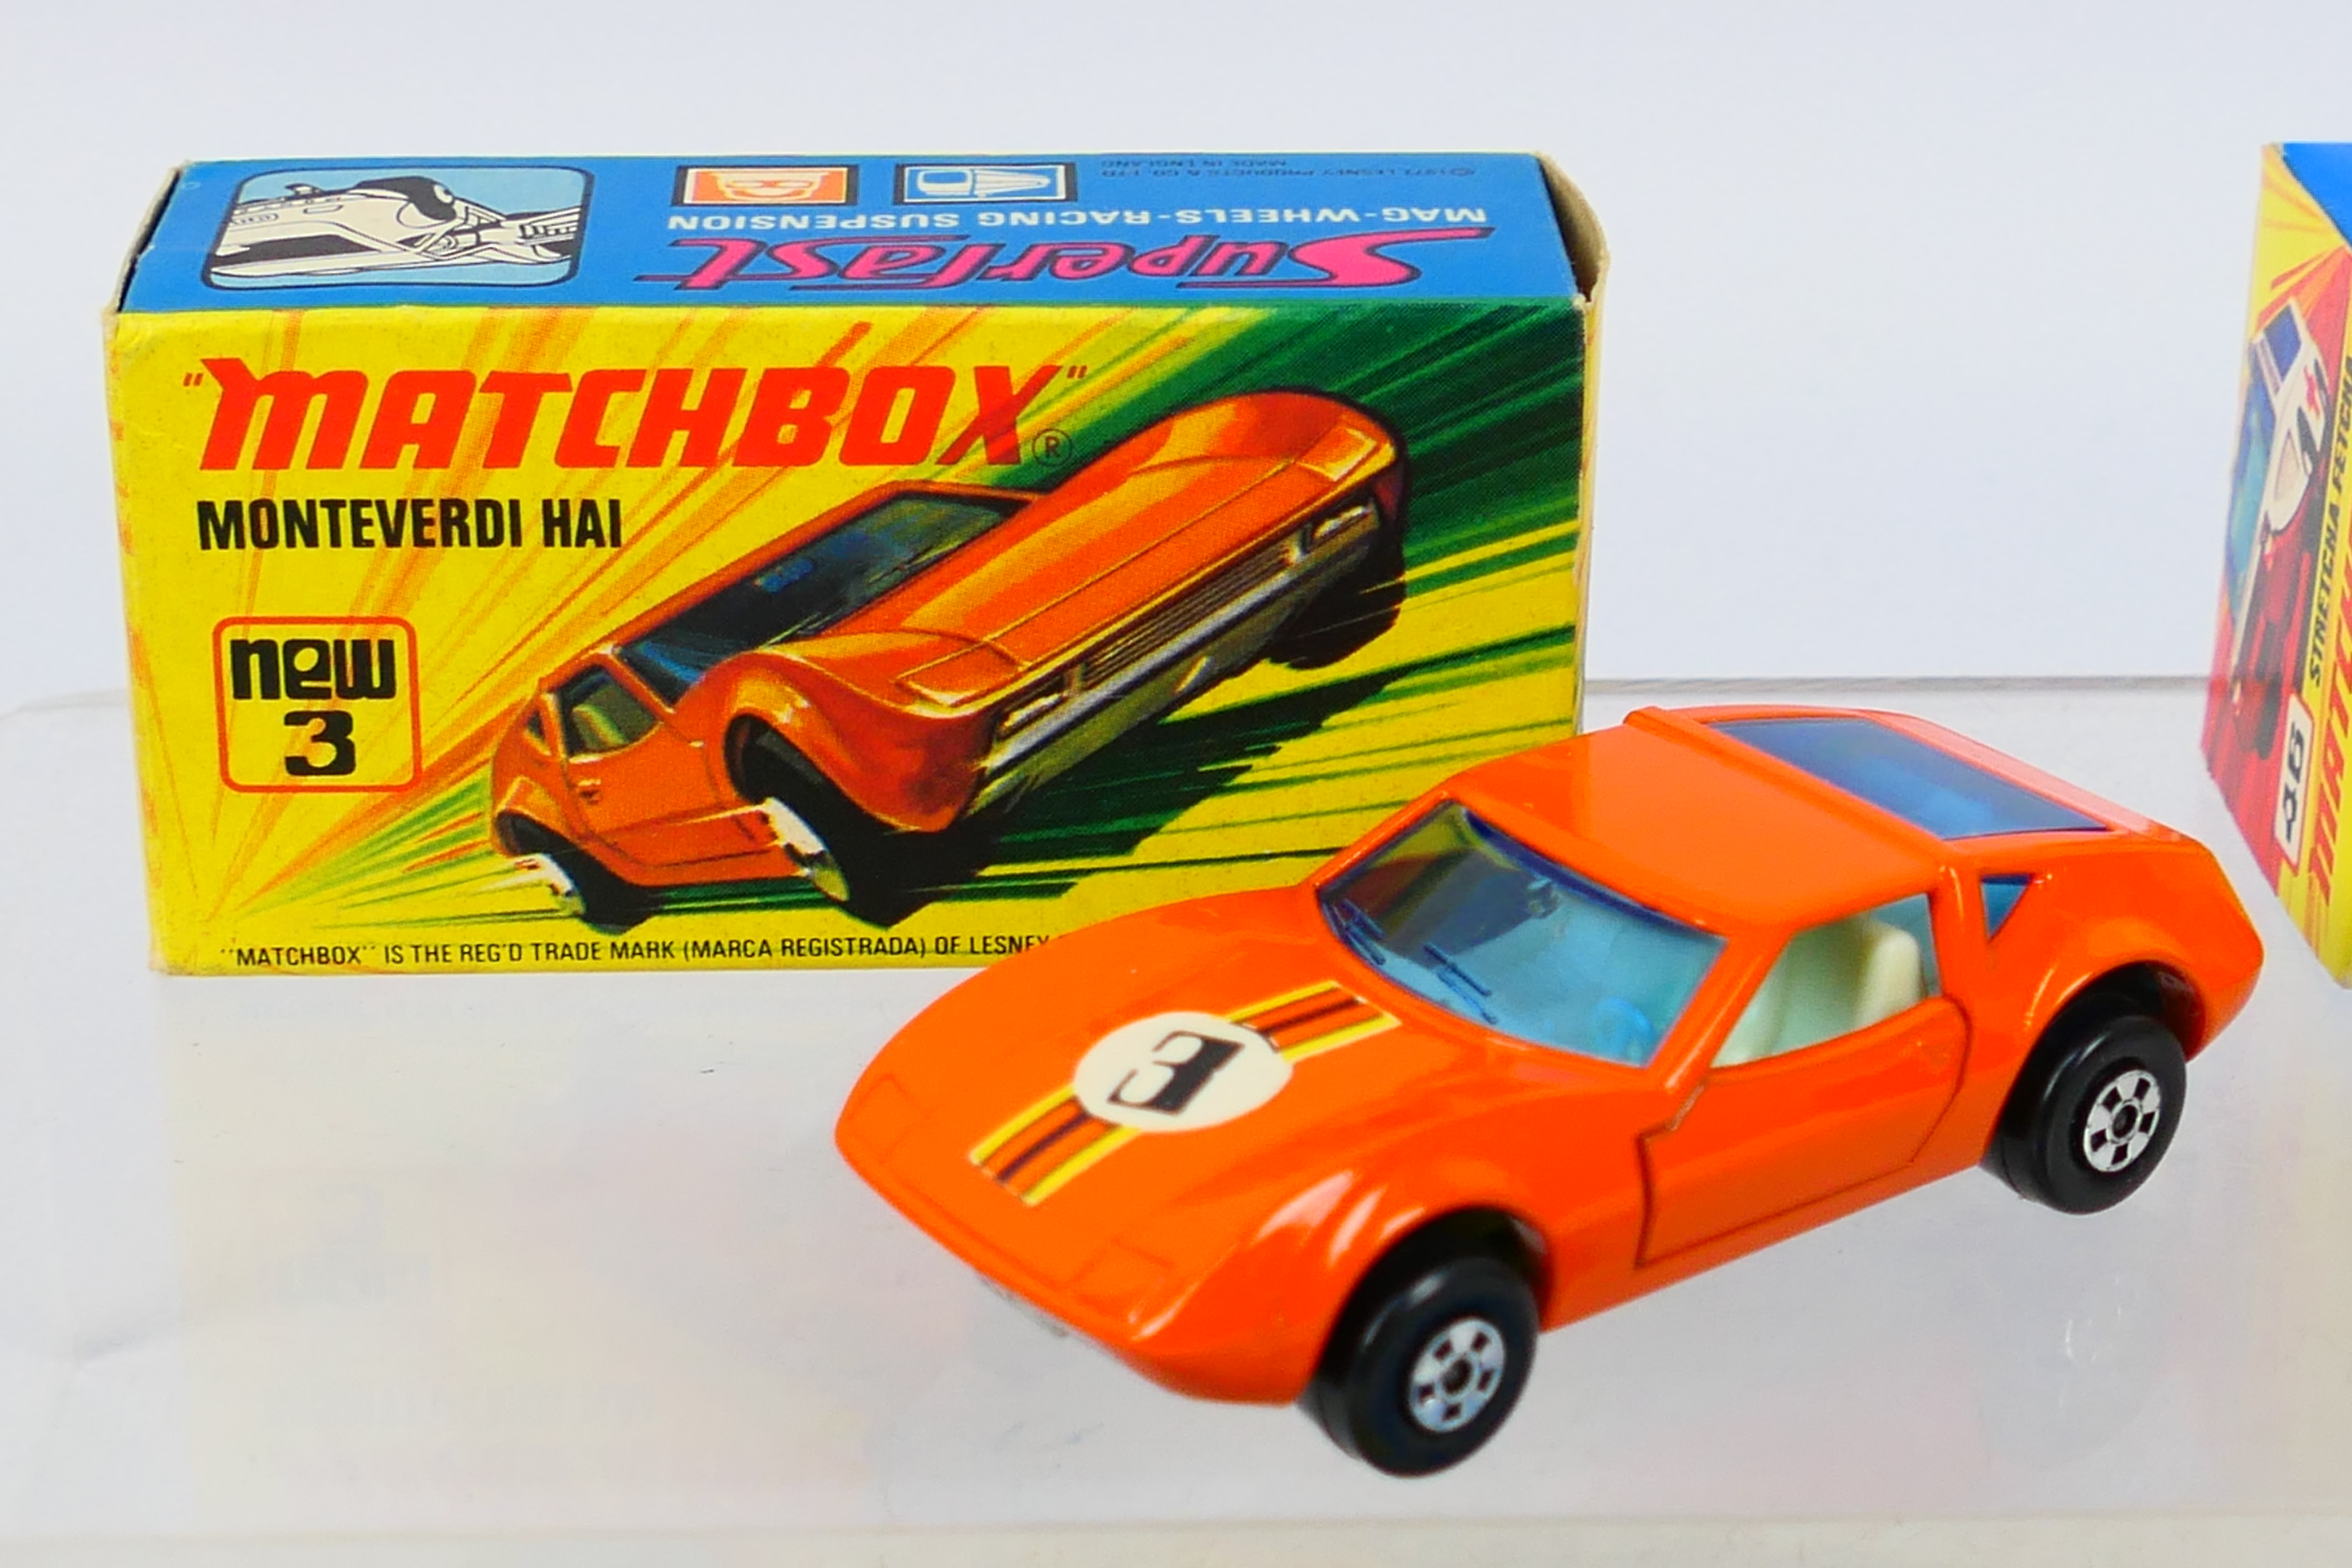 Matchbox - Superfast - 3 x boxed models, Monteverdi Hai # 3, - Image 2 of 6